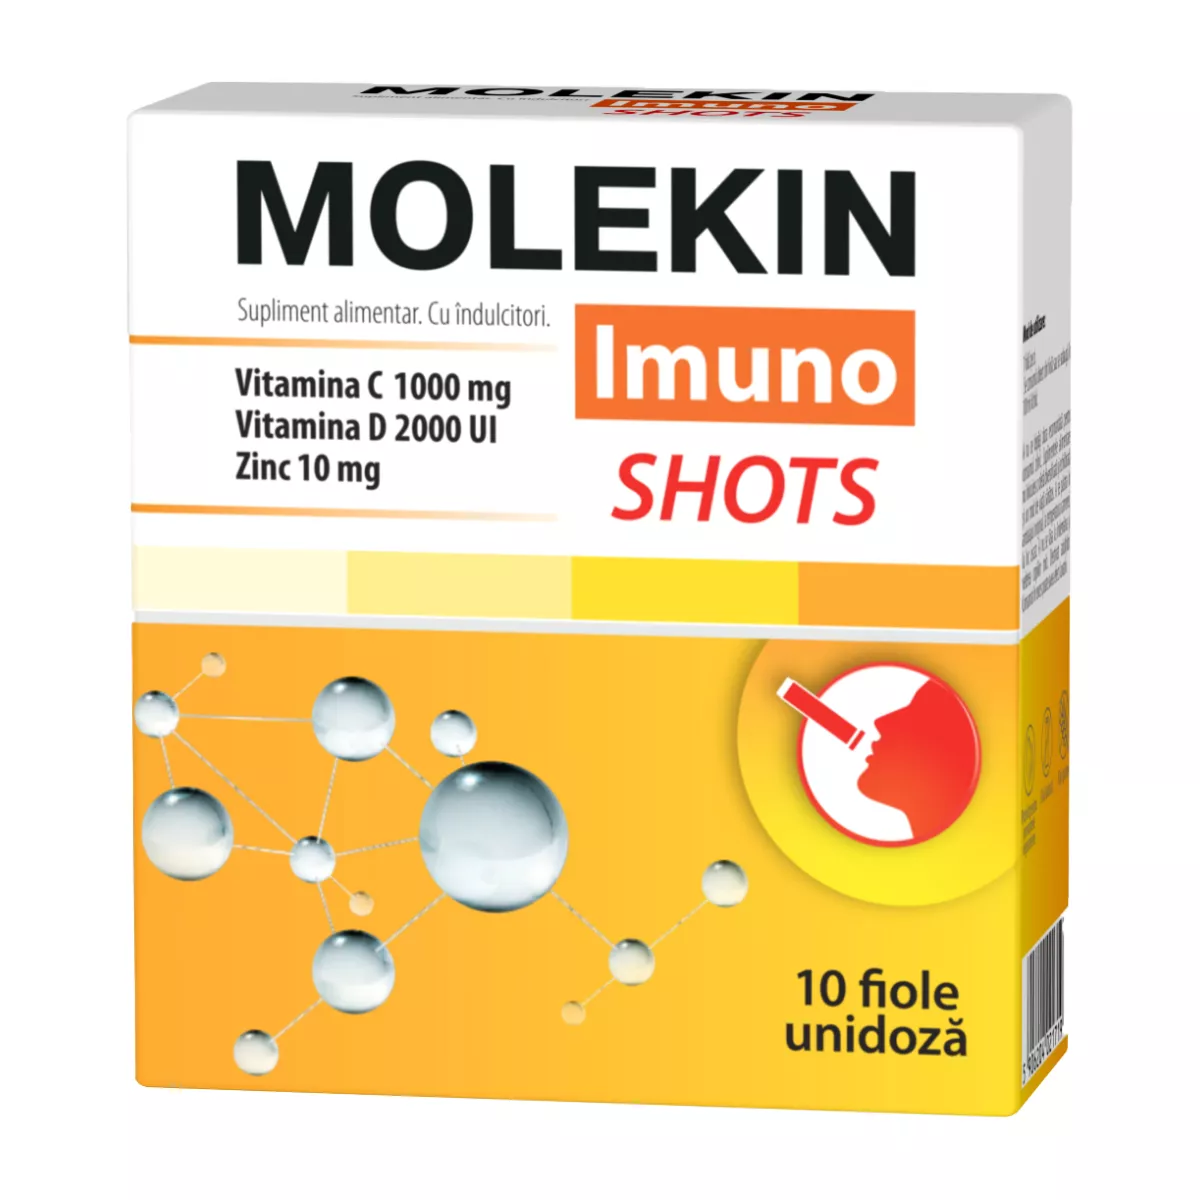 Molekin Imuno Shots, 10 fiole, Zdrovit, [],nordpharm.ro